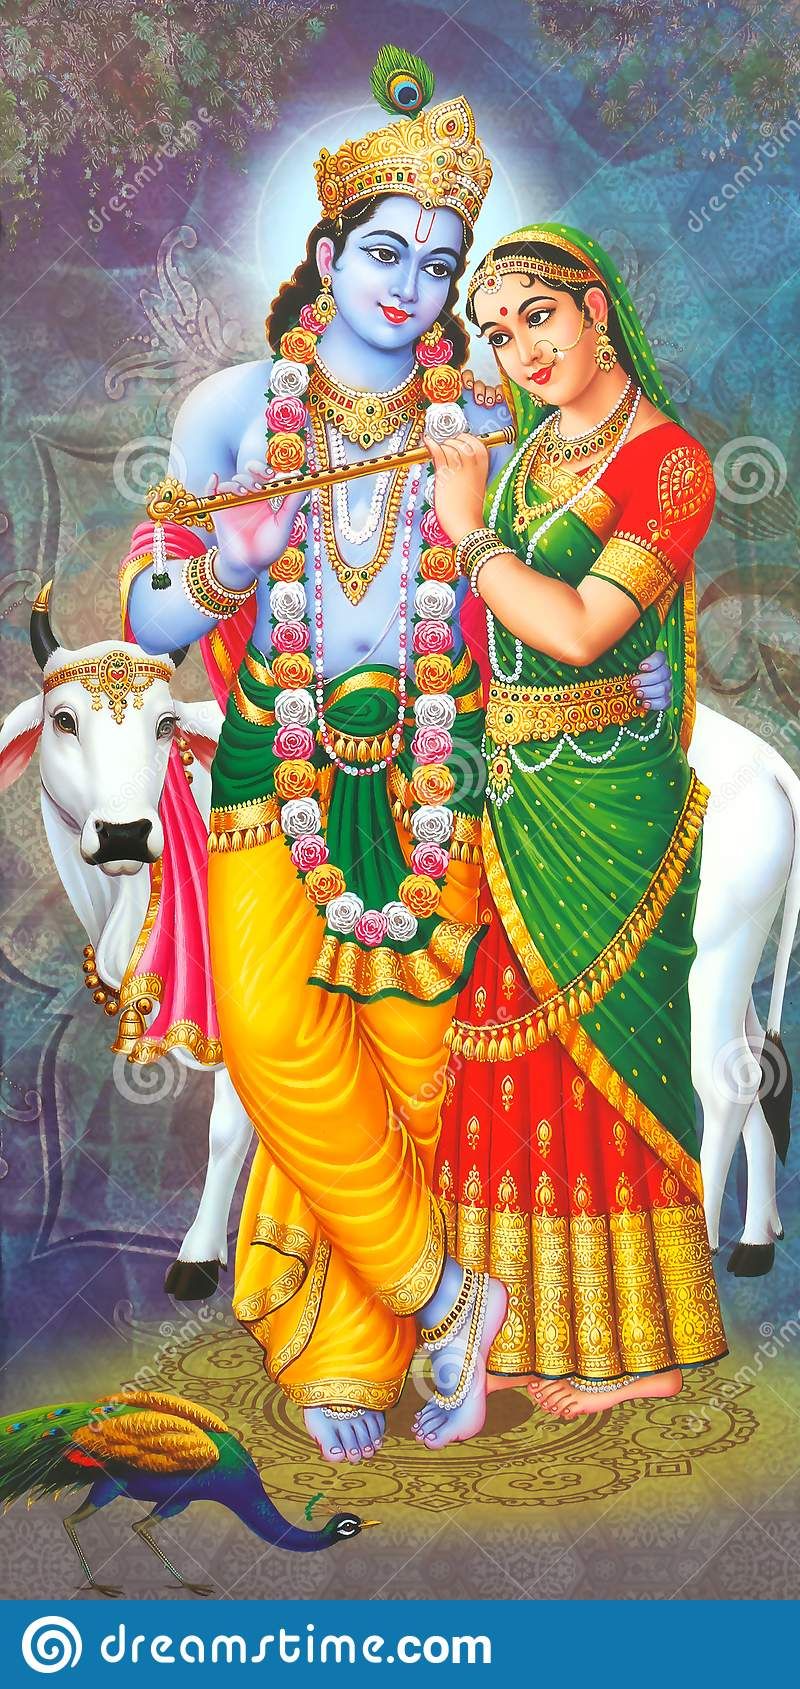 Lord Radha Krishna Beautiful Wallpaper Stock Image - Image of wallpaper, radha: 